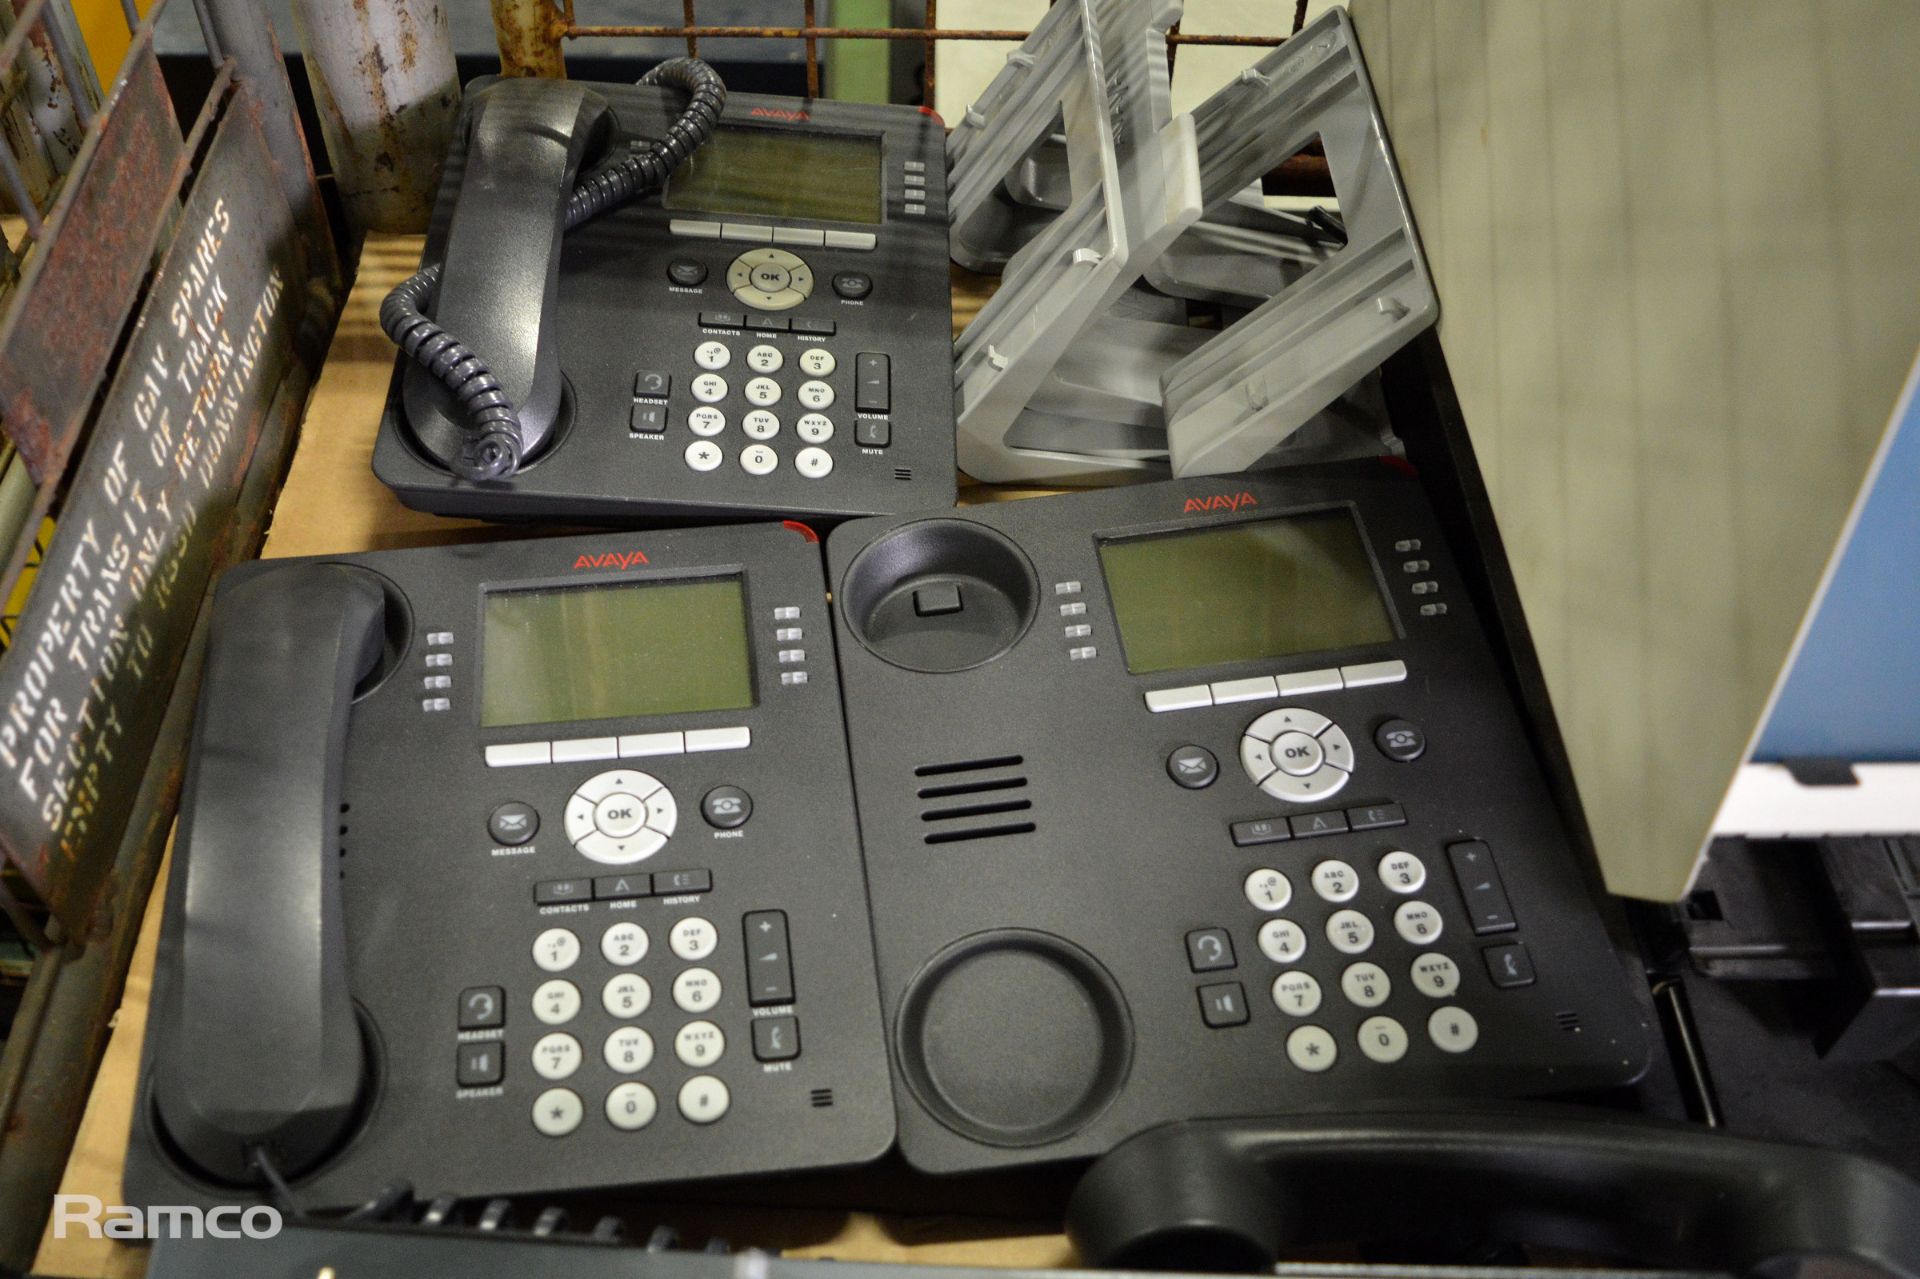 Bell & Howell microfiche reader, 2x Fax machines, desk phones, Avaya IP500 V2 network hub - Image 3 of 7